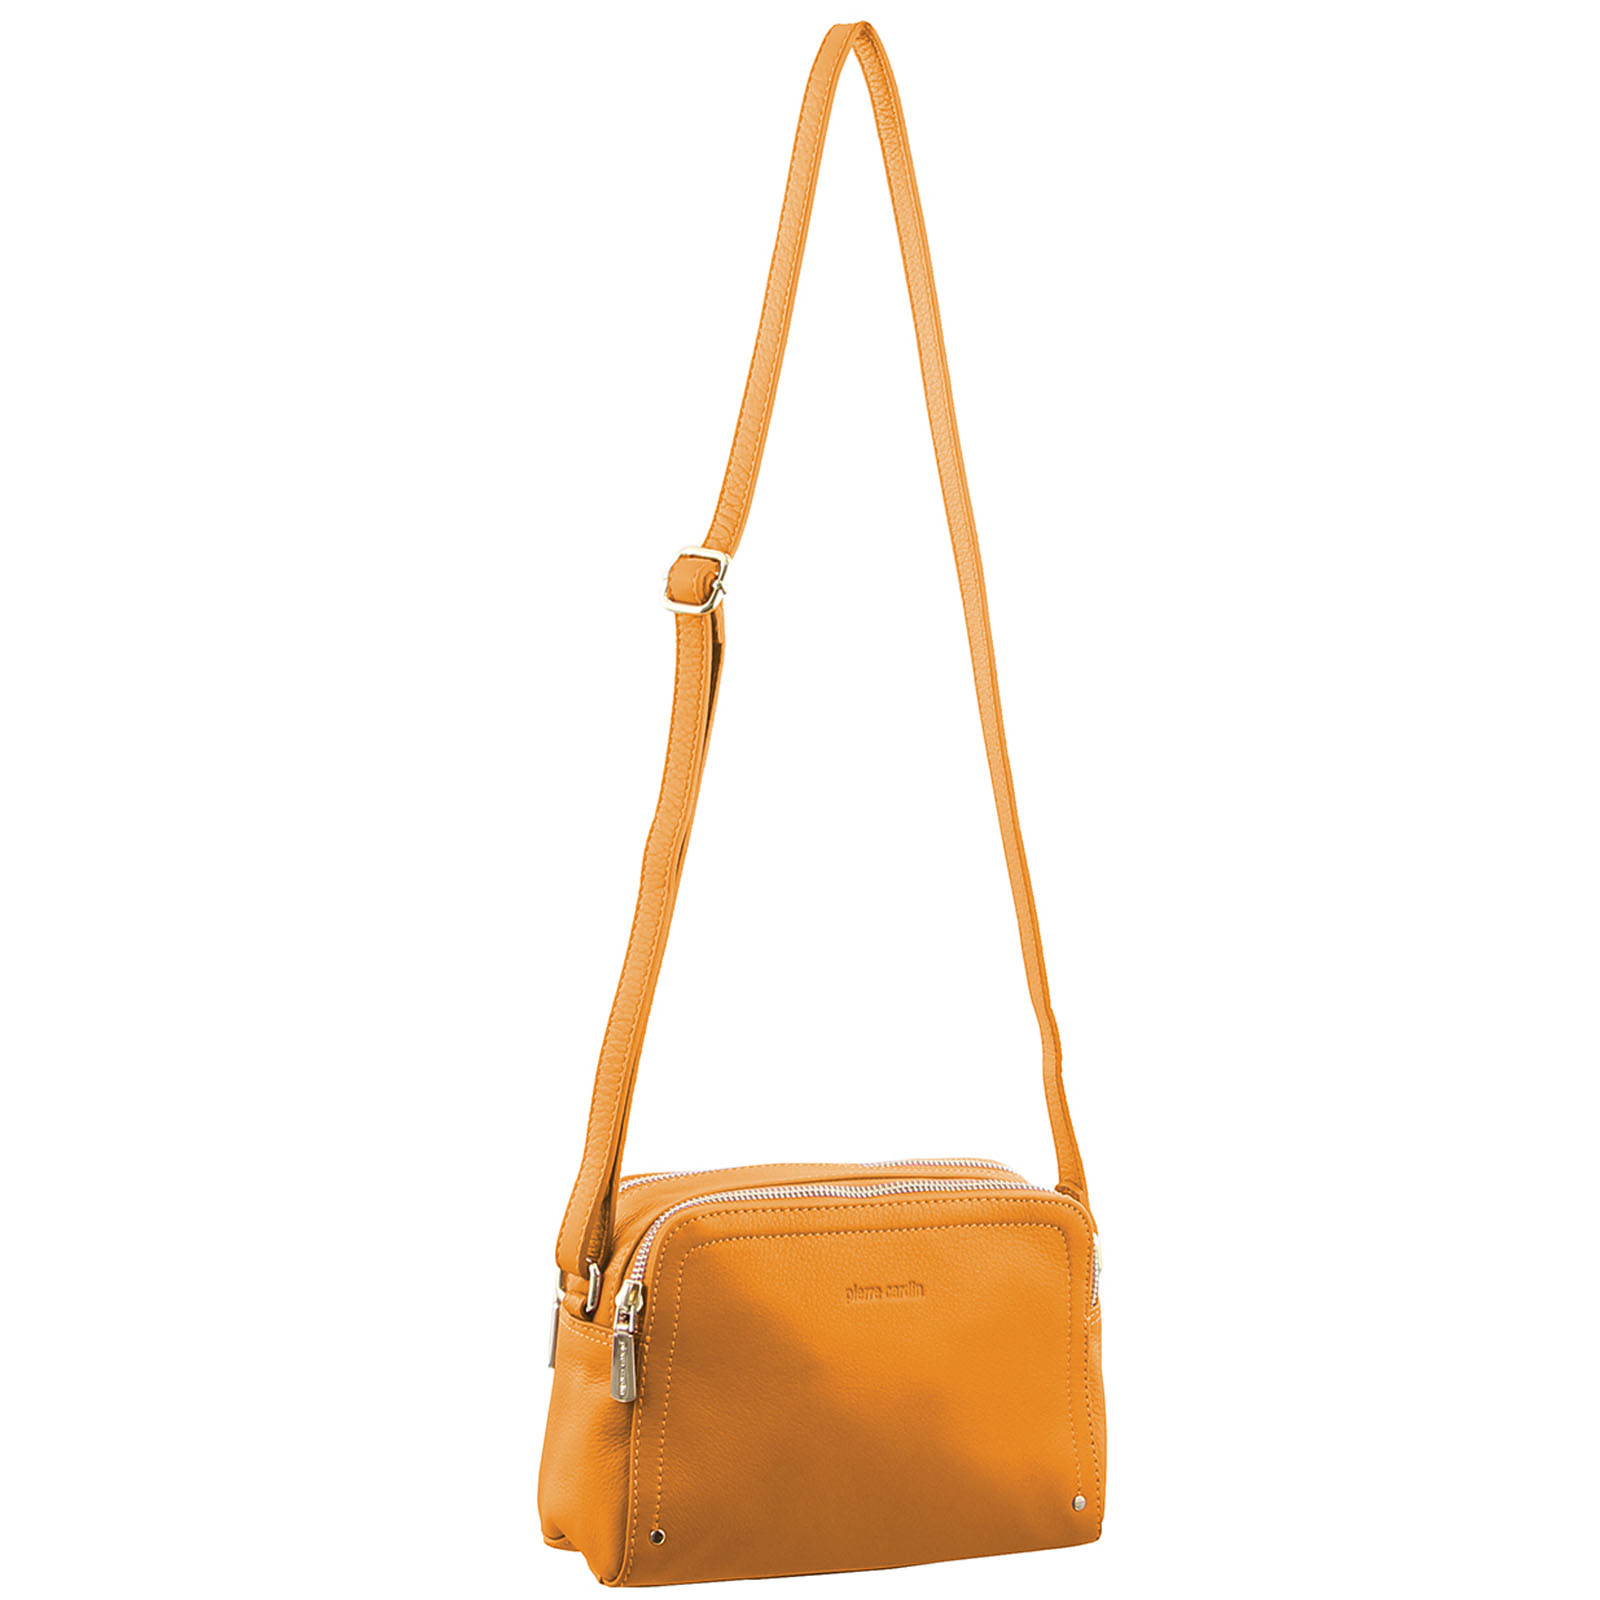 Pierre Cardin Premium Soft Italian Leather Cross Body Bag | eBay